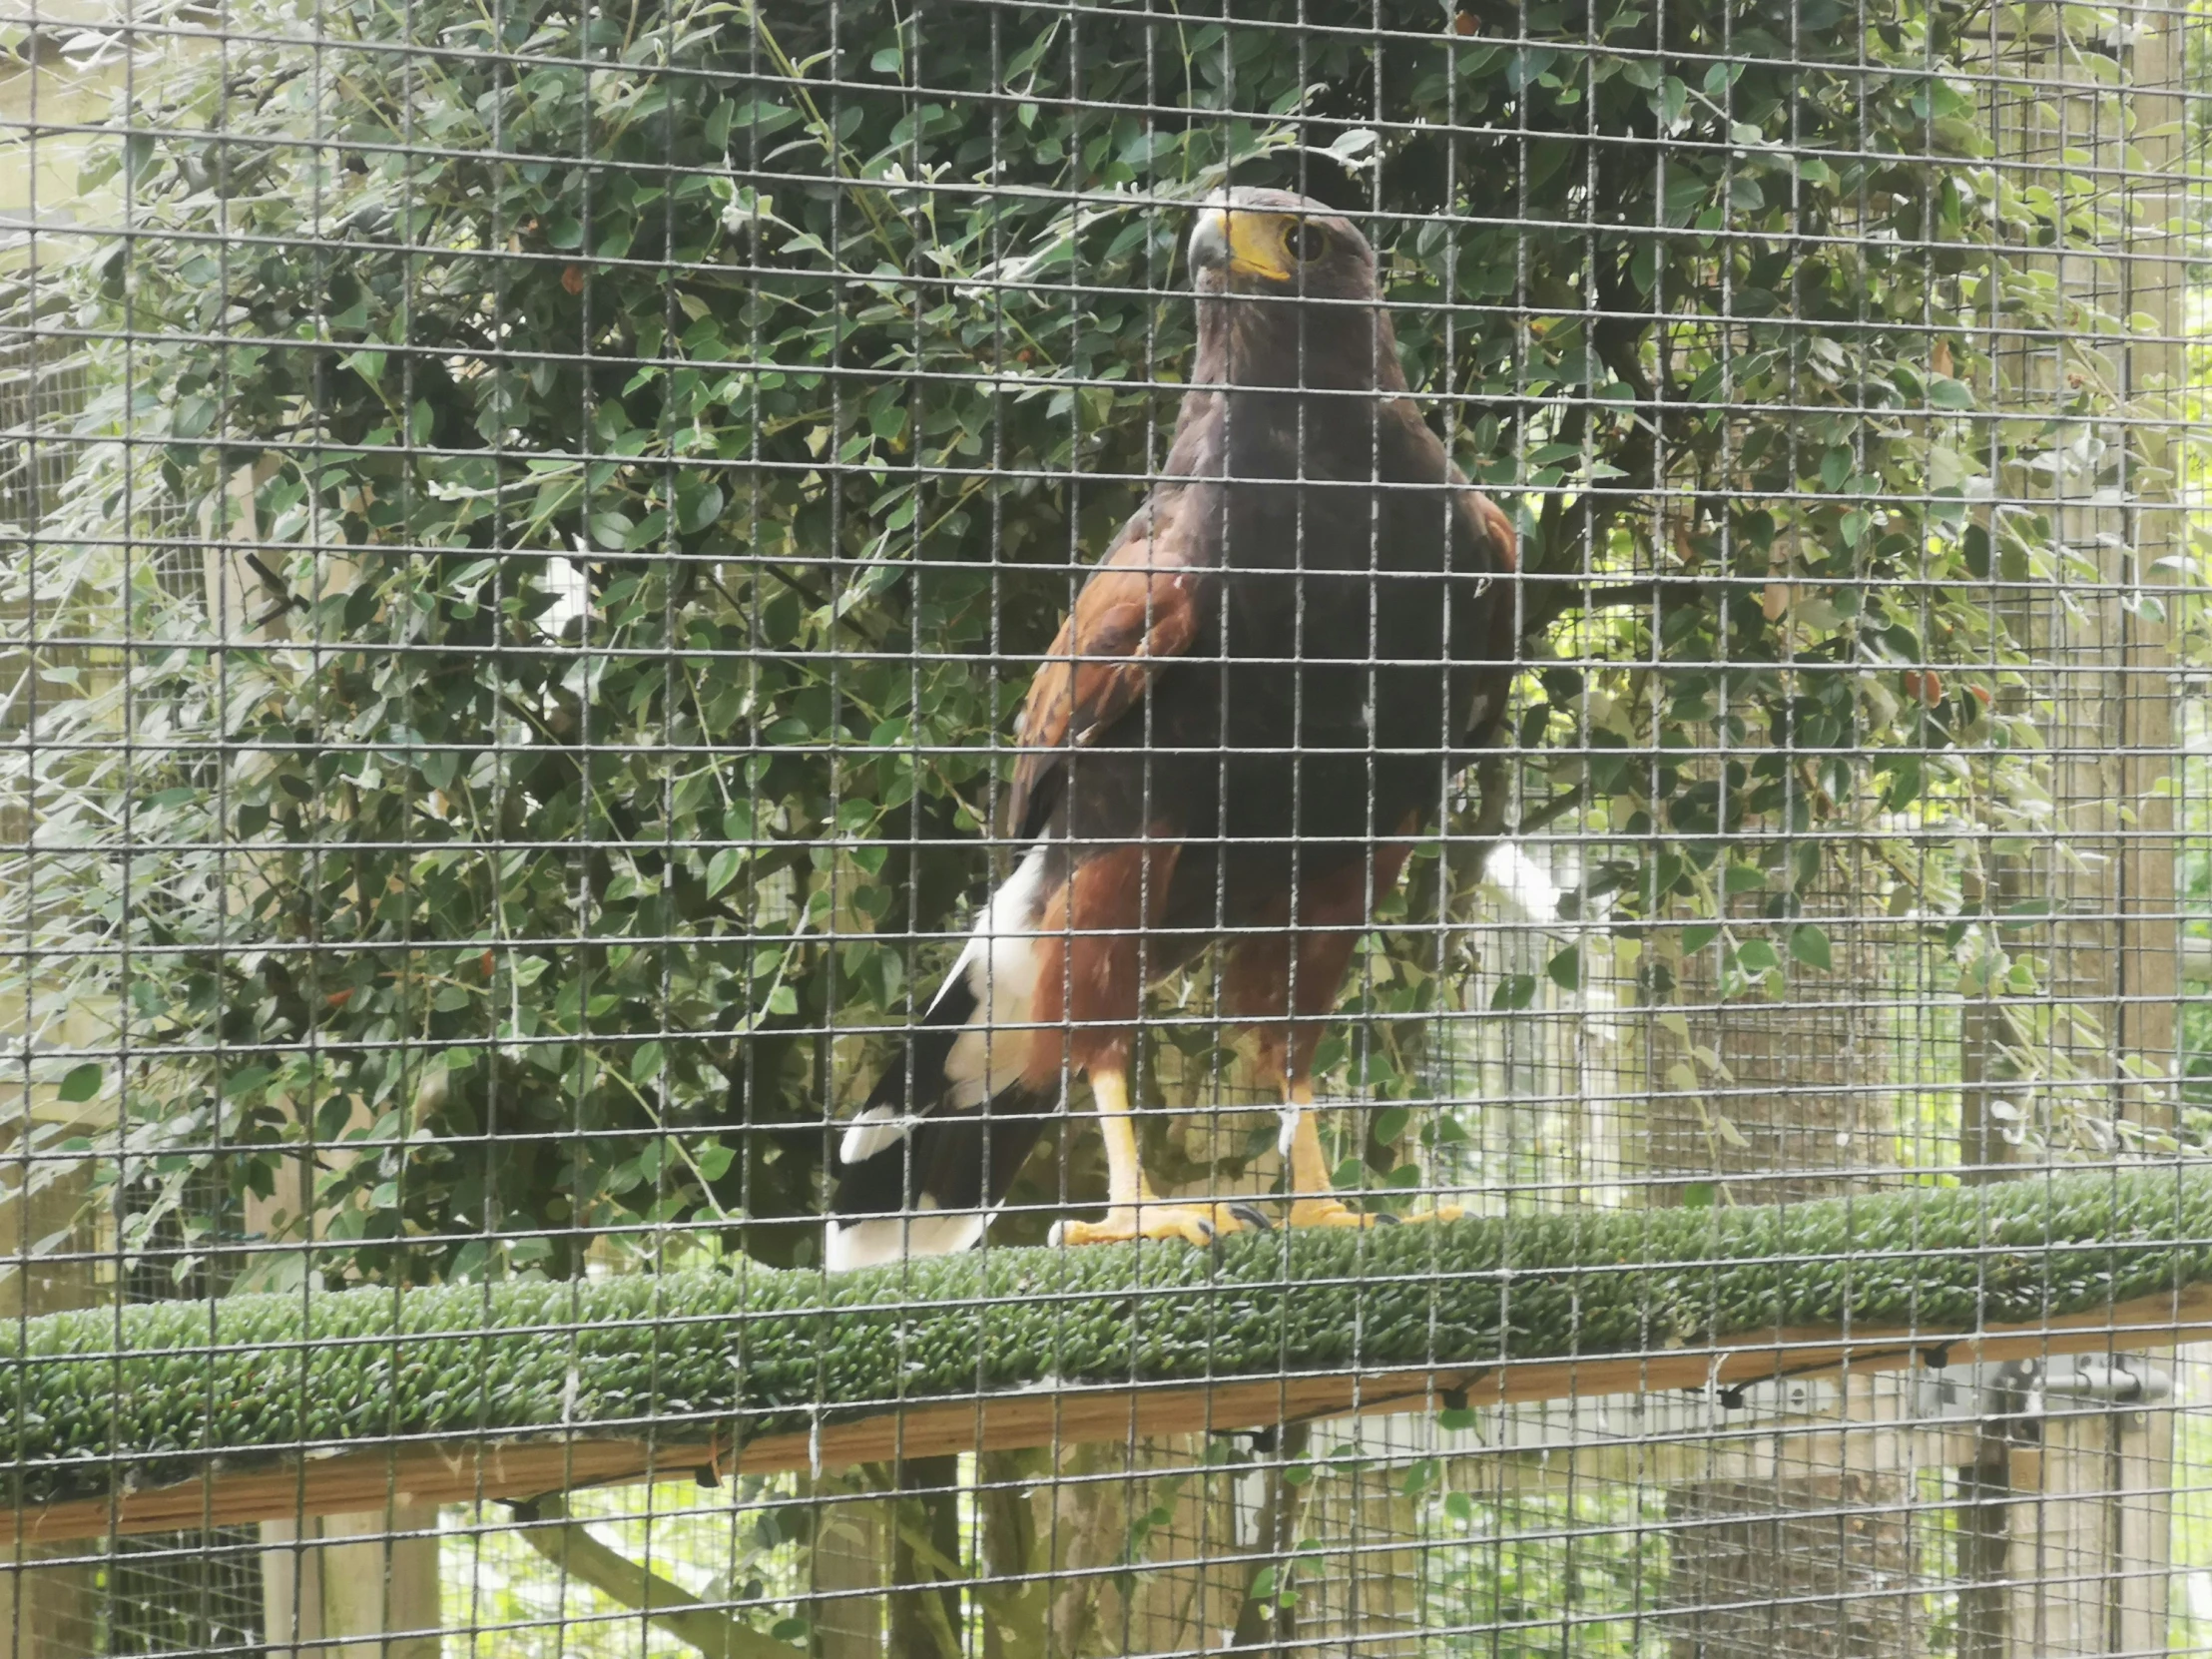 a big bird that is walking around in an enclosure